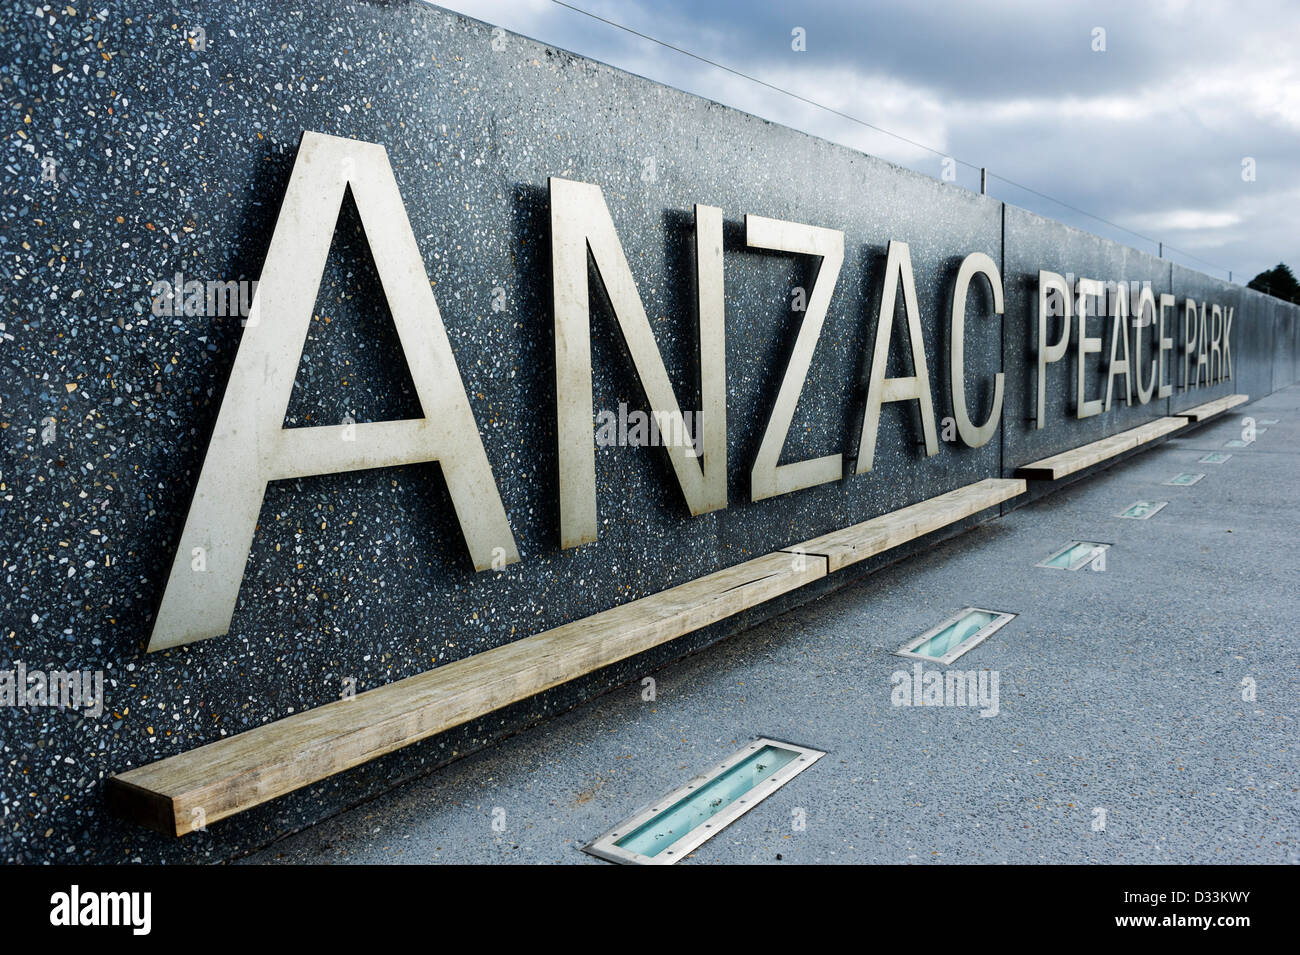 The Anzac Peace Park in Albany, Western Australia Stock Photo